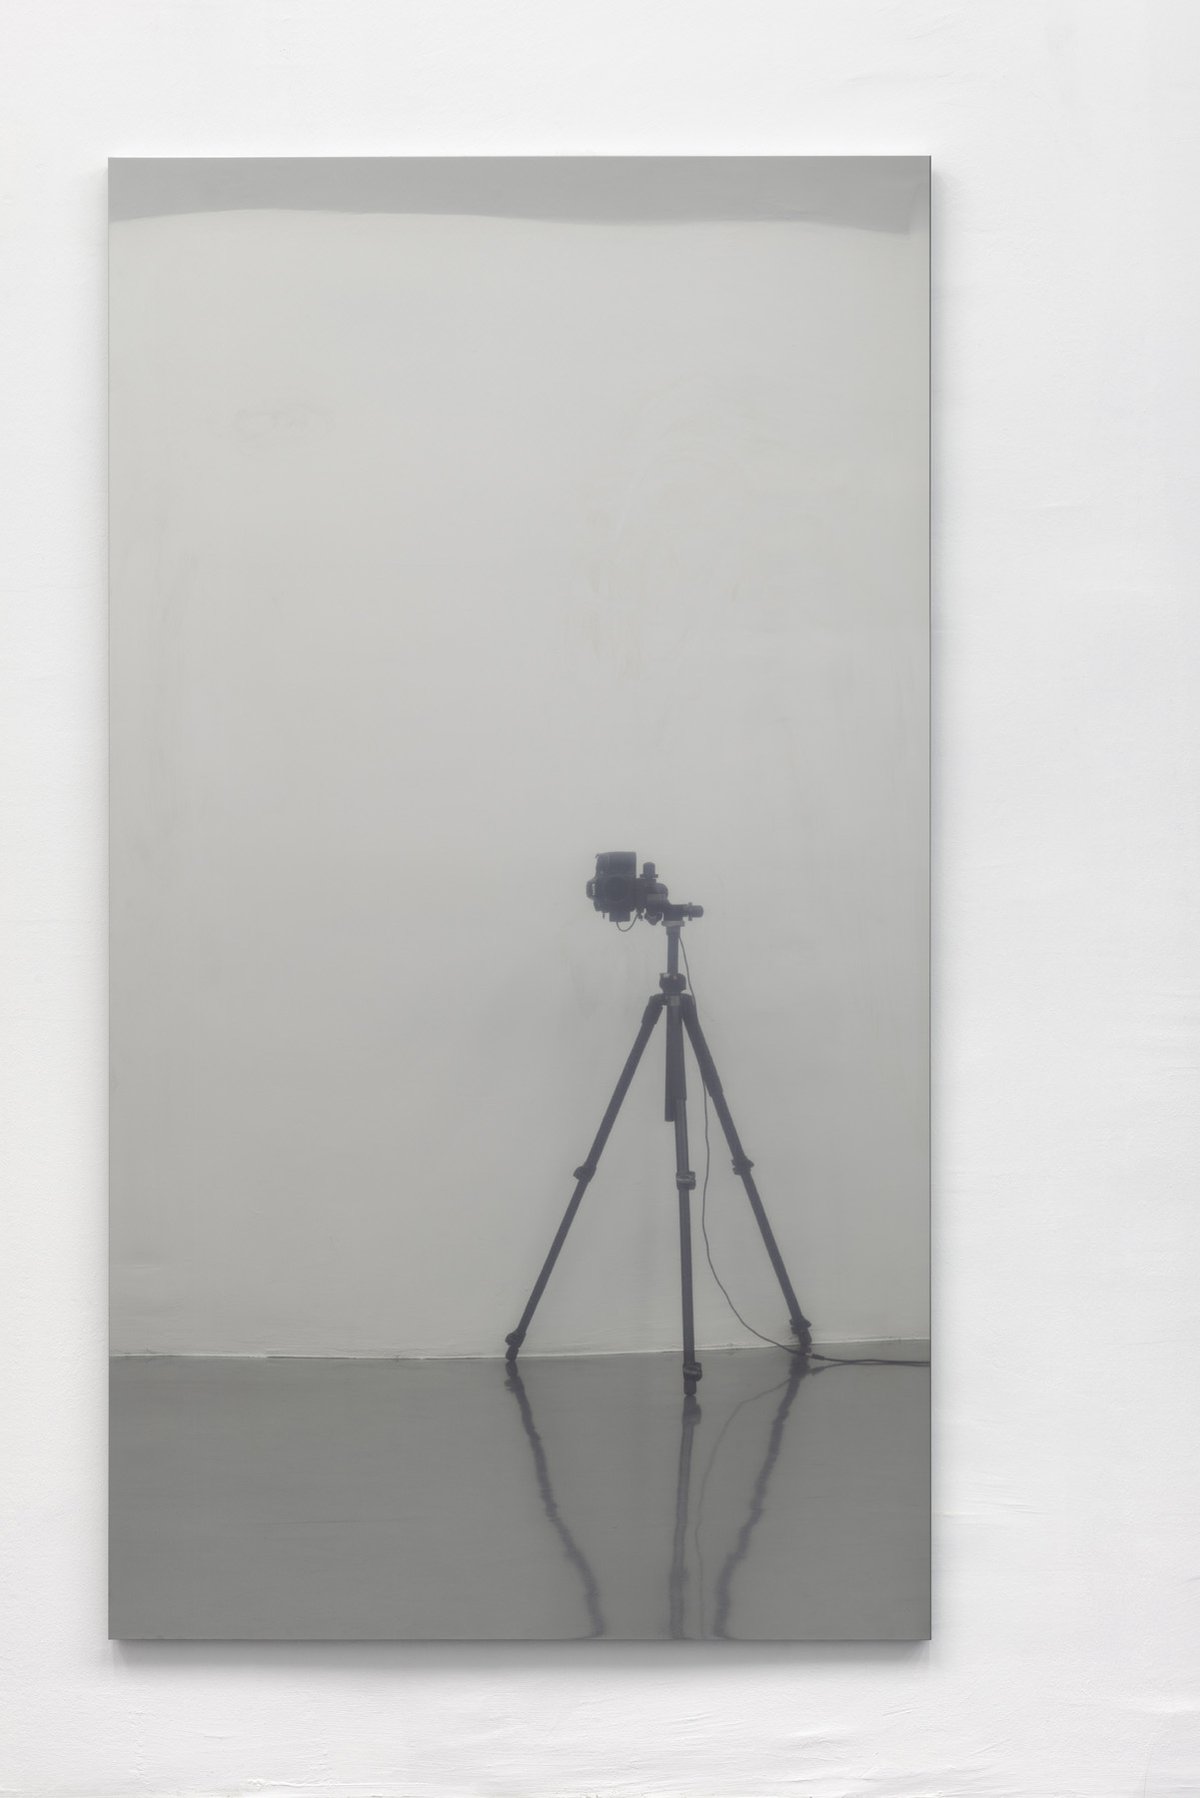 Nick OberthalerUntitled, 2015Mirror-polished stainless steel180 x 100 cm